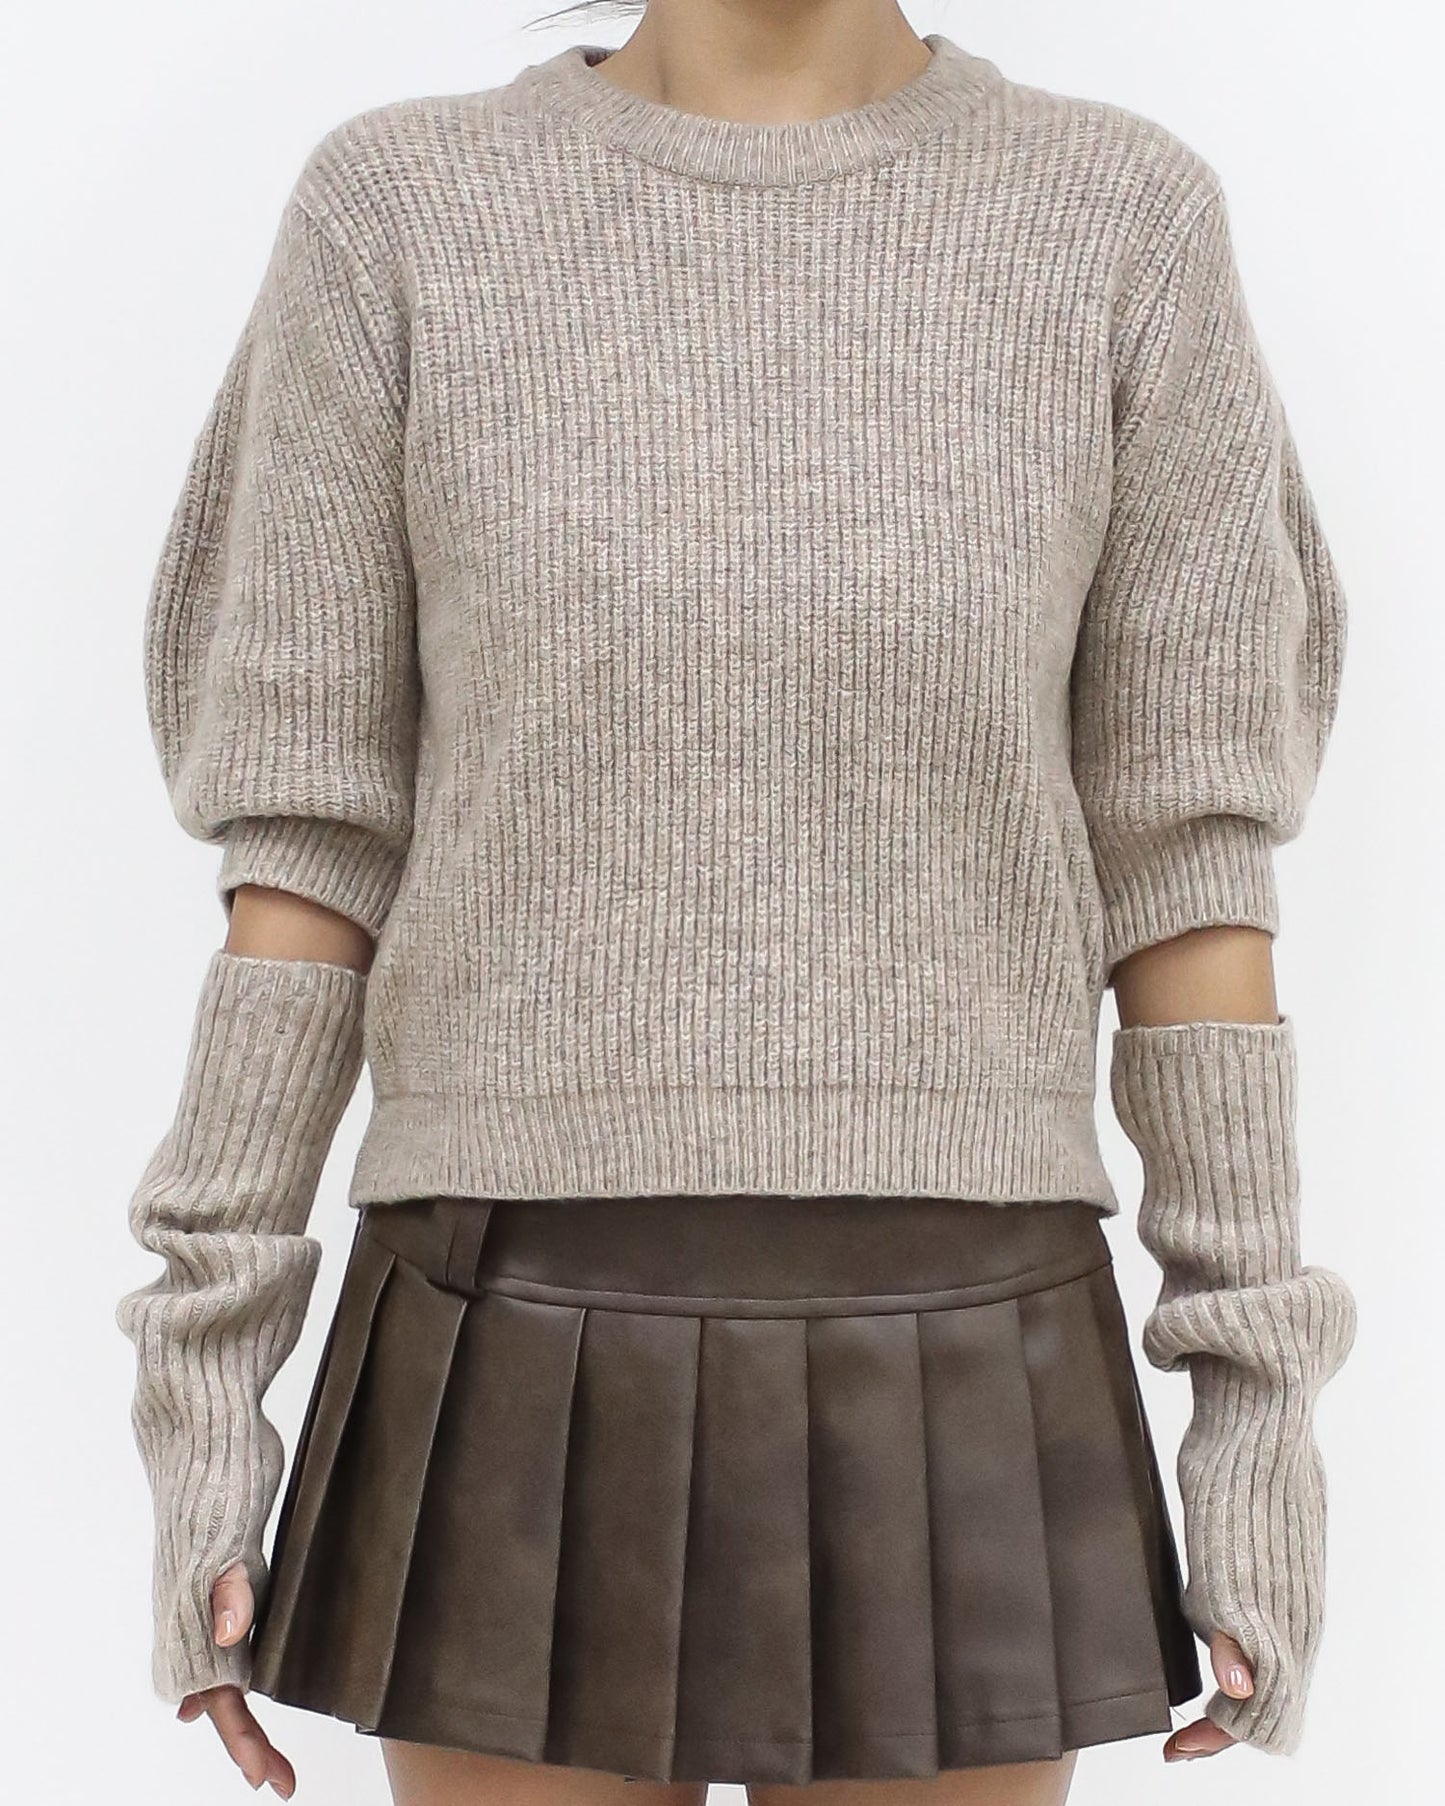 beige knitted top w/ sleeves